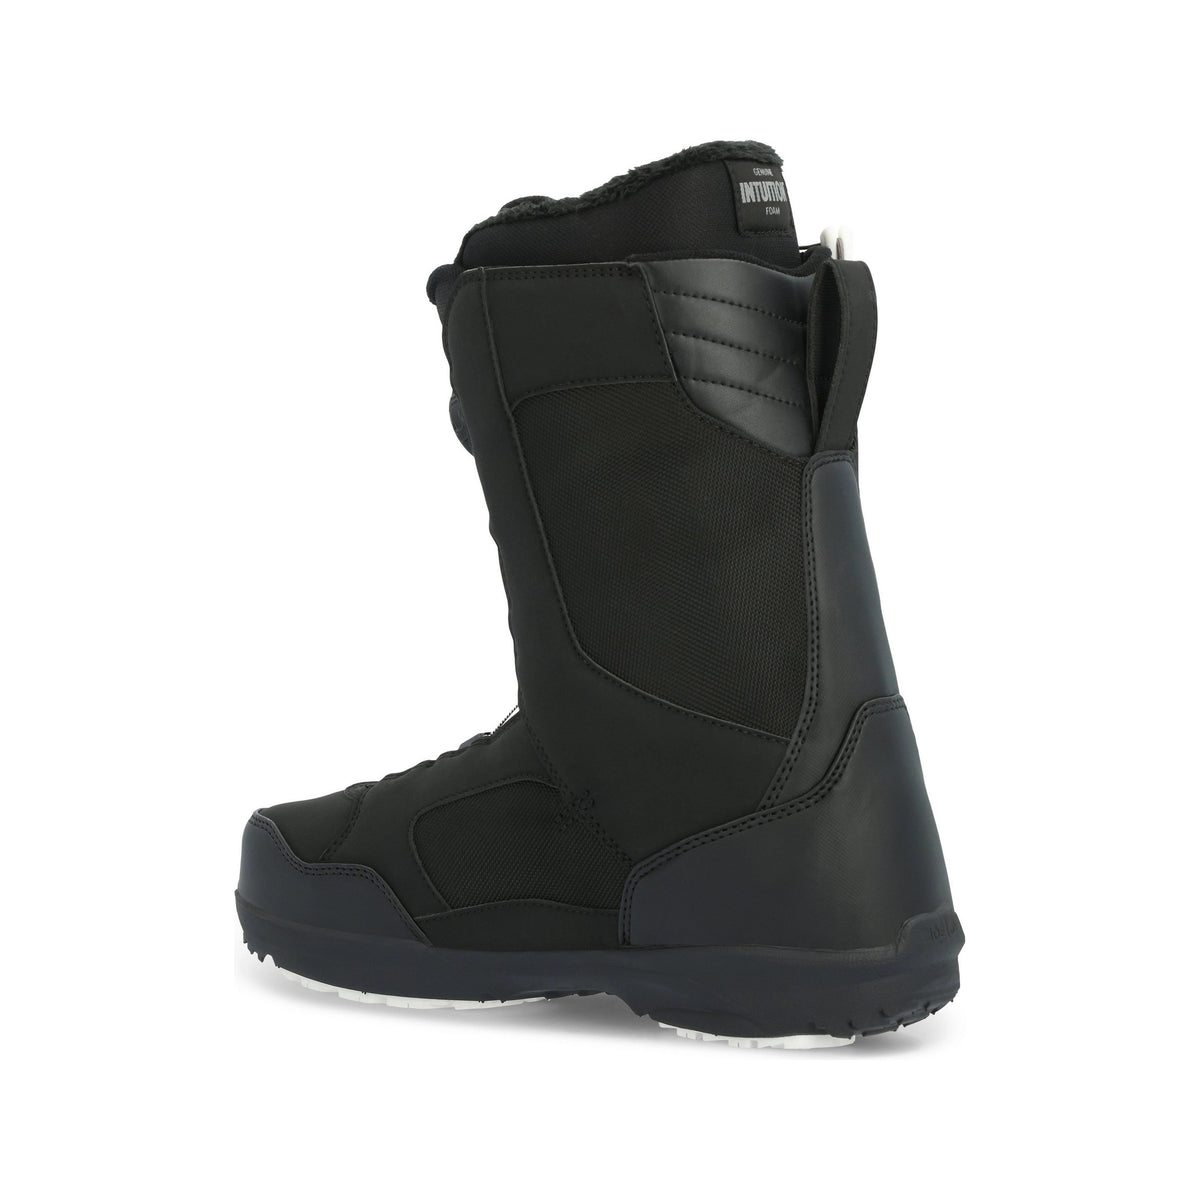 Ride Jackson Snowboard Boots